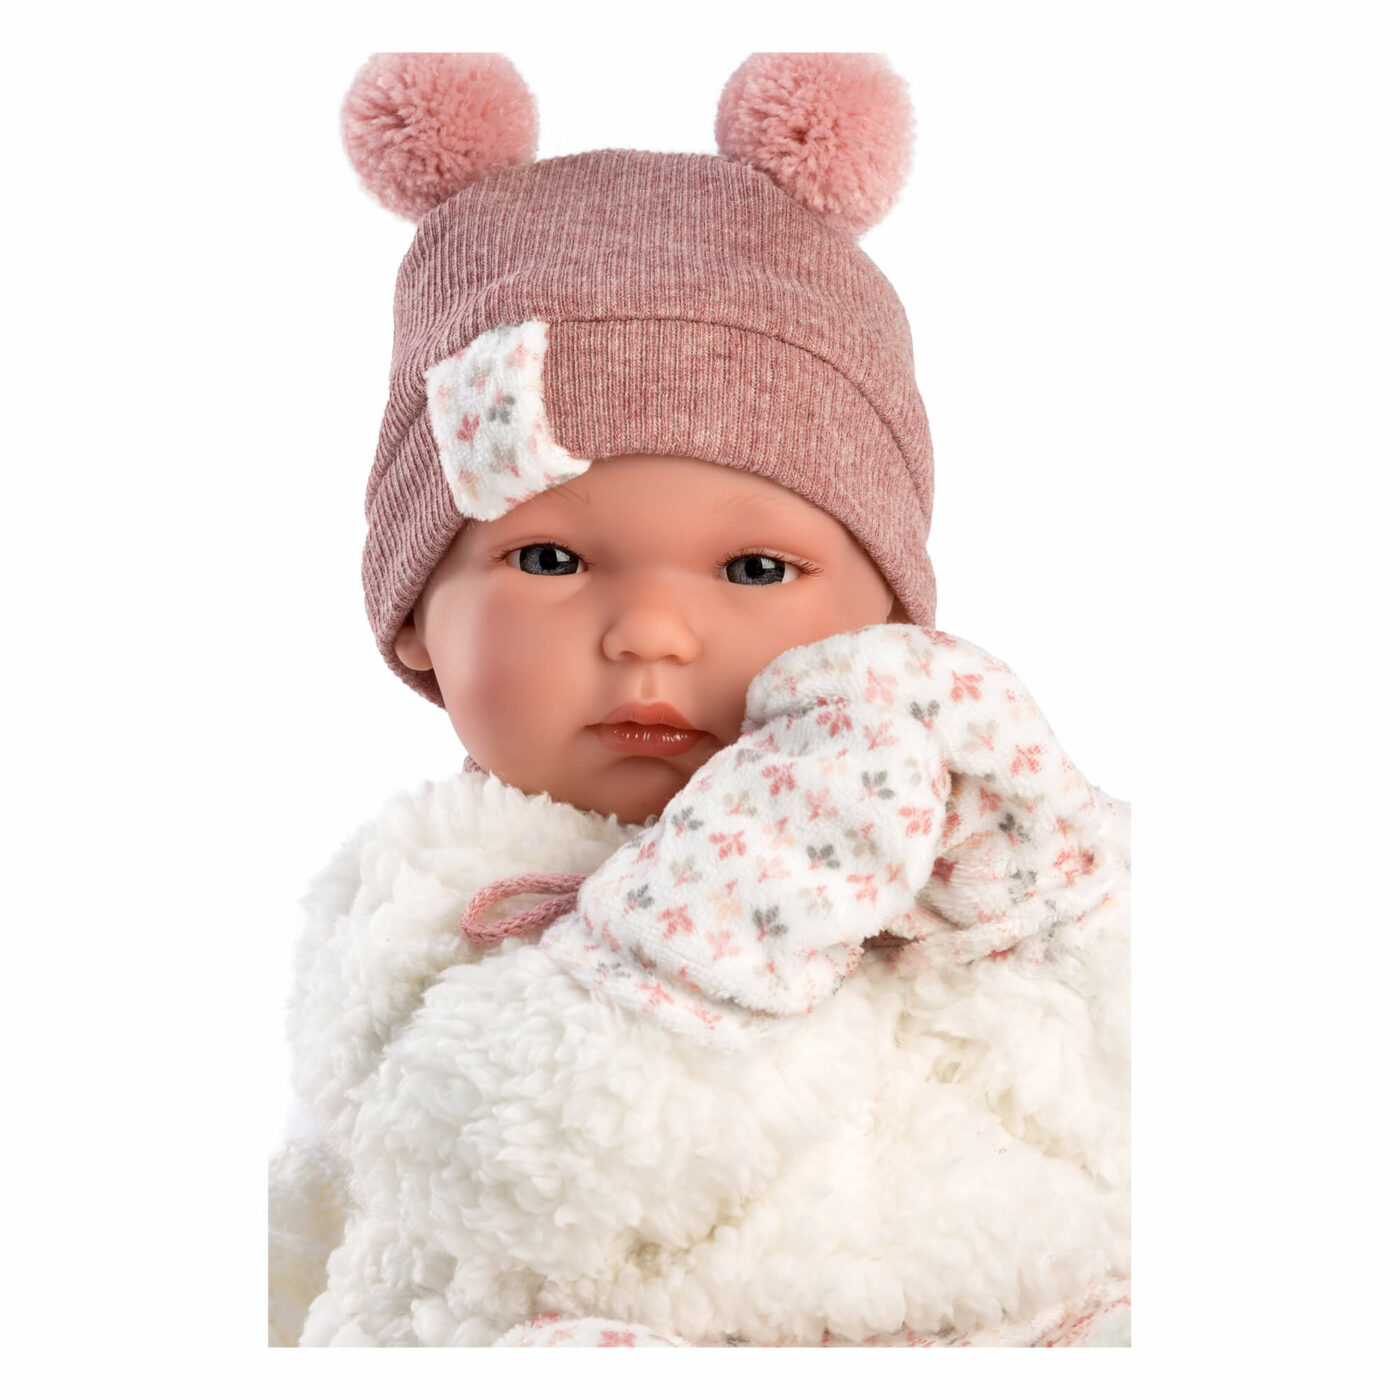 Llorens - 35cm Baby Doll - Bimba With Blanket8